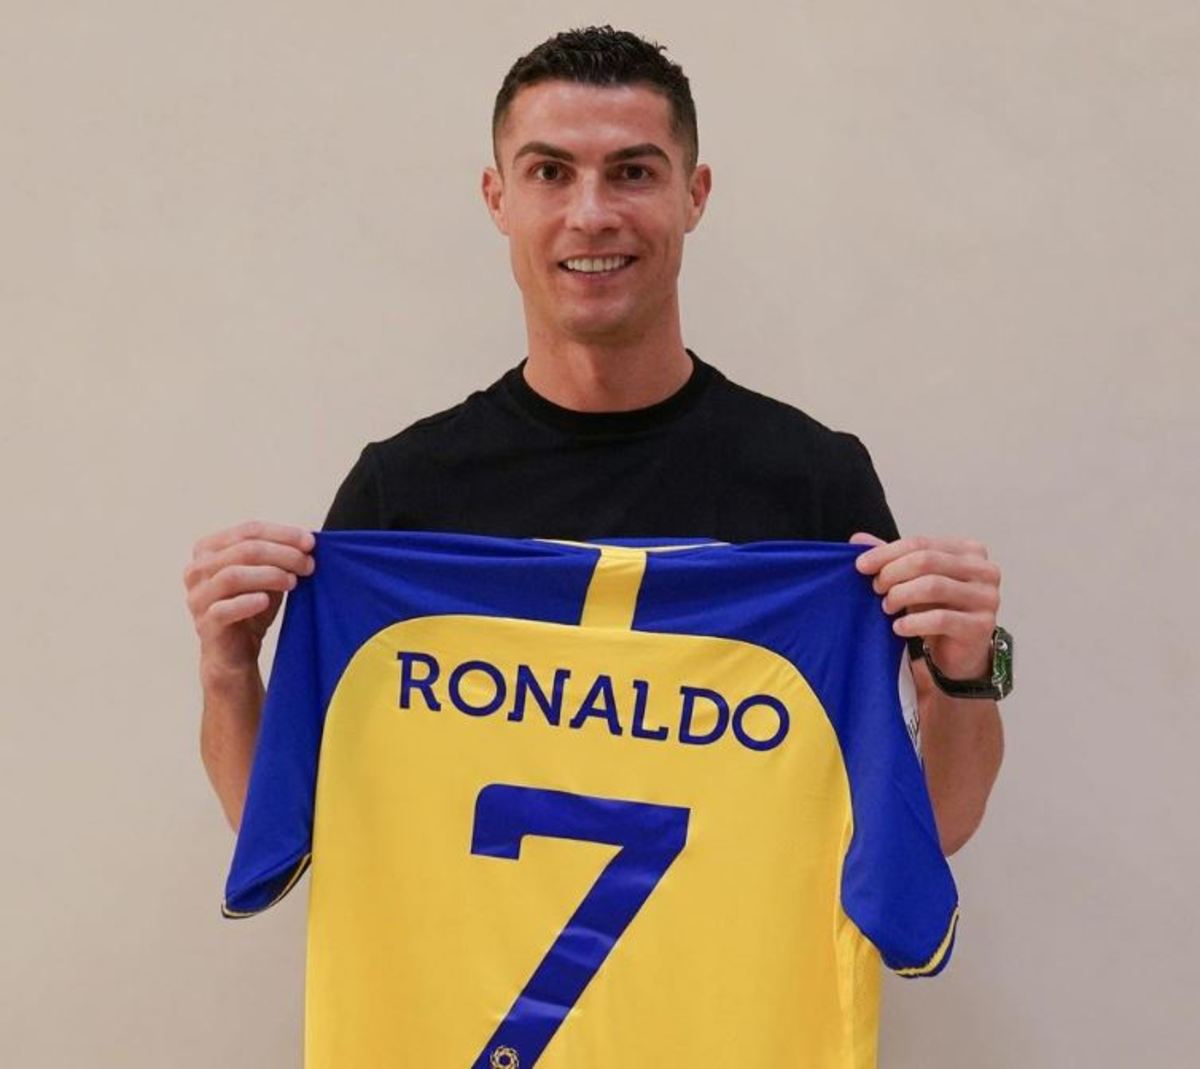 Why does Cristiano Ronaldo wear the No.7 shirt?